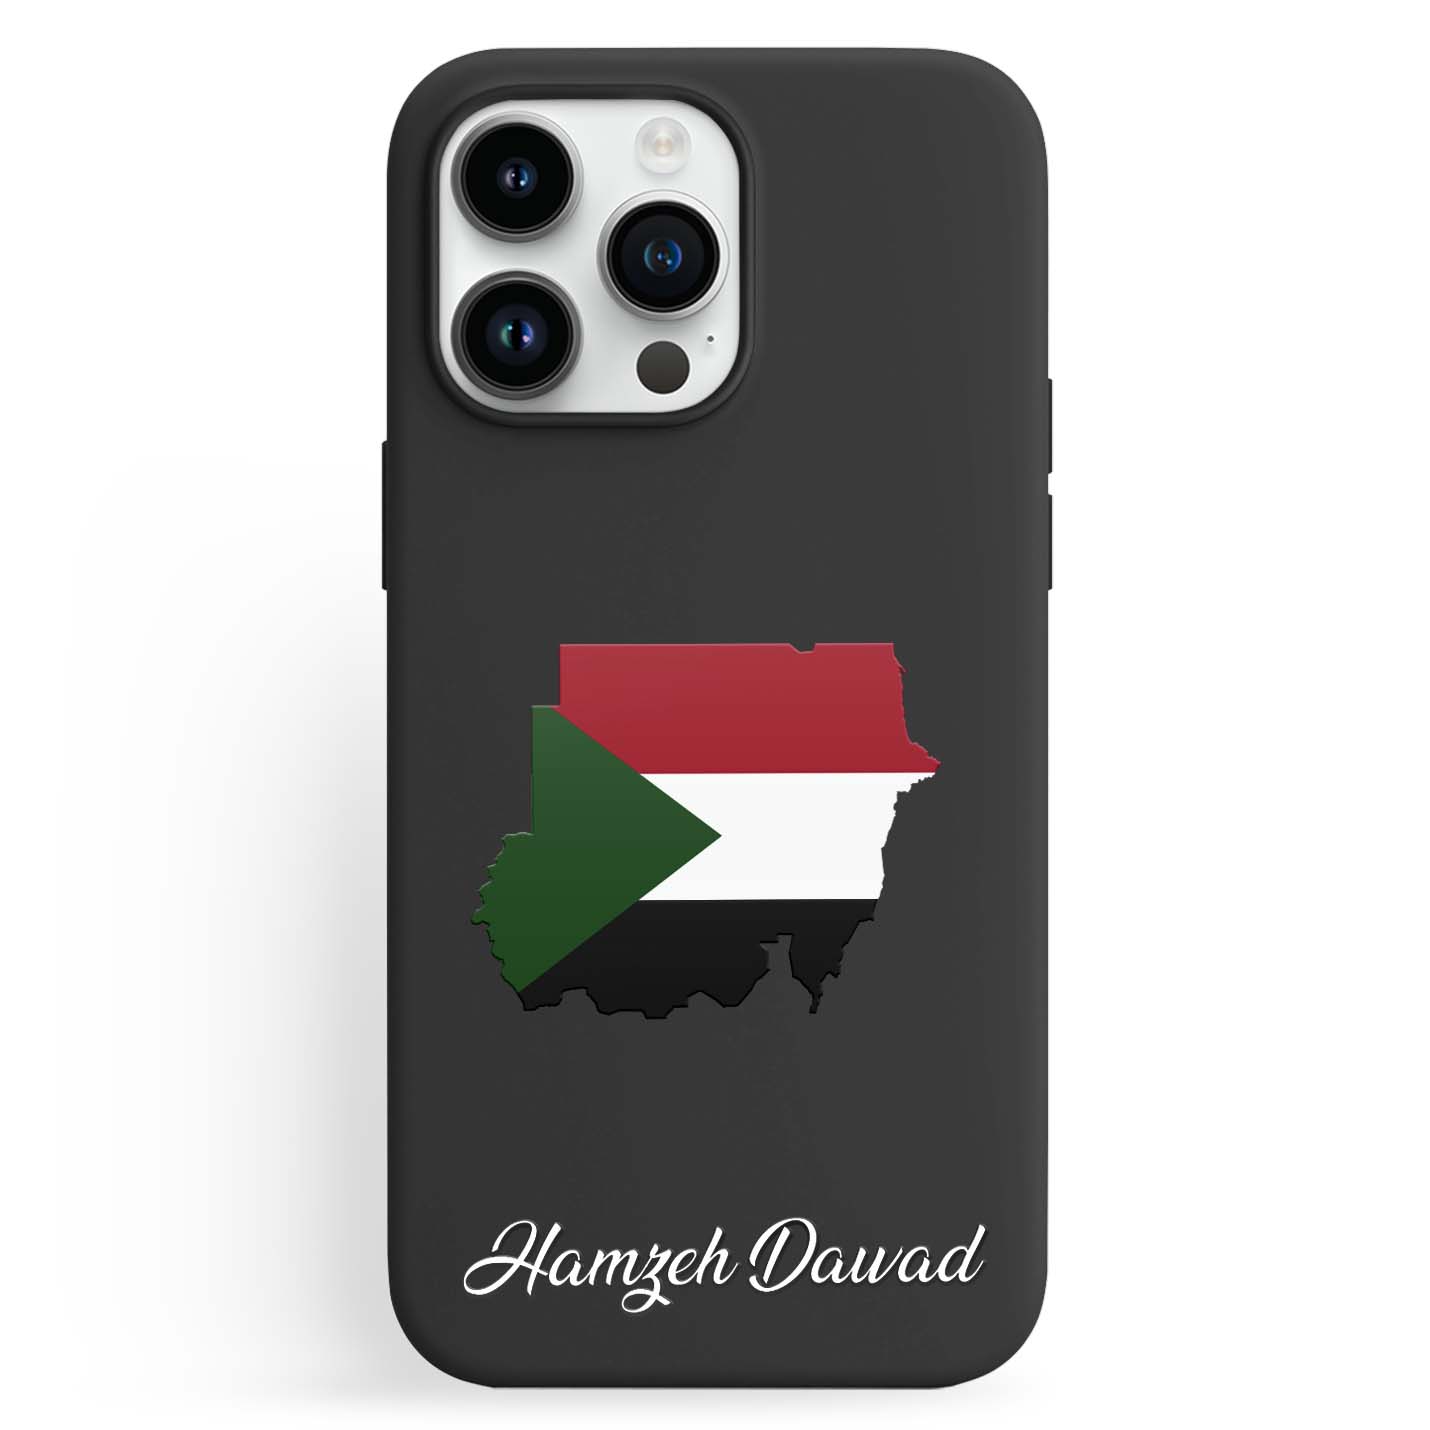 Handyhüllen mit Flagge - Sudan